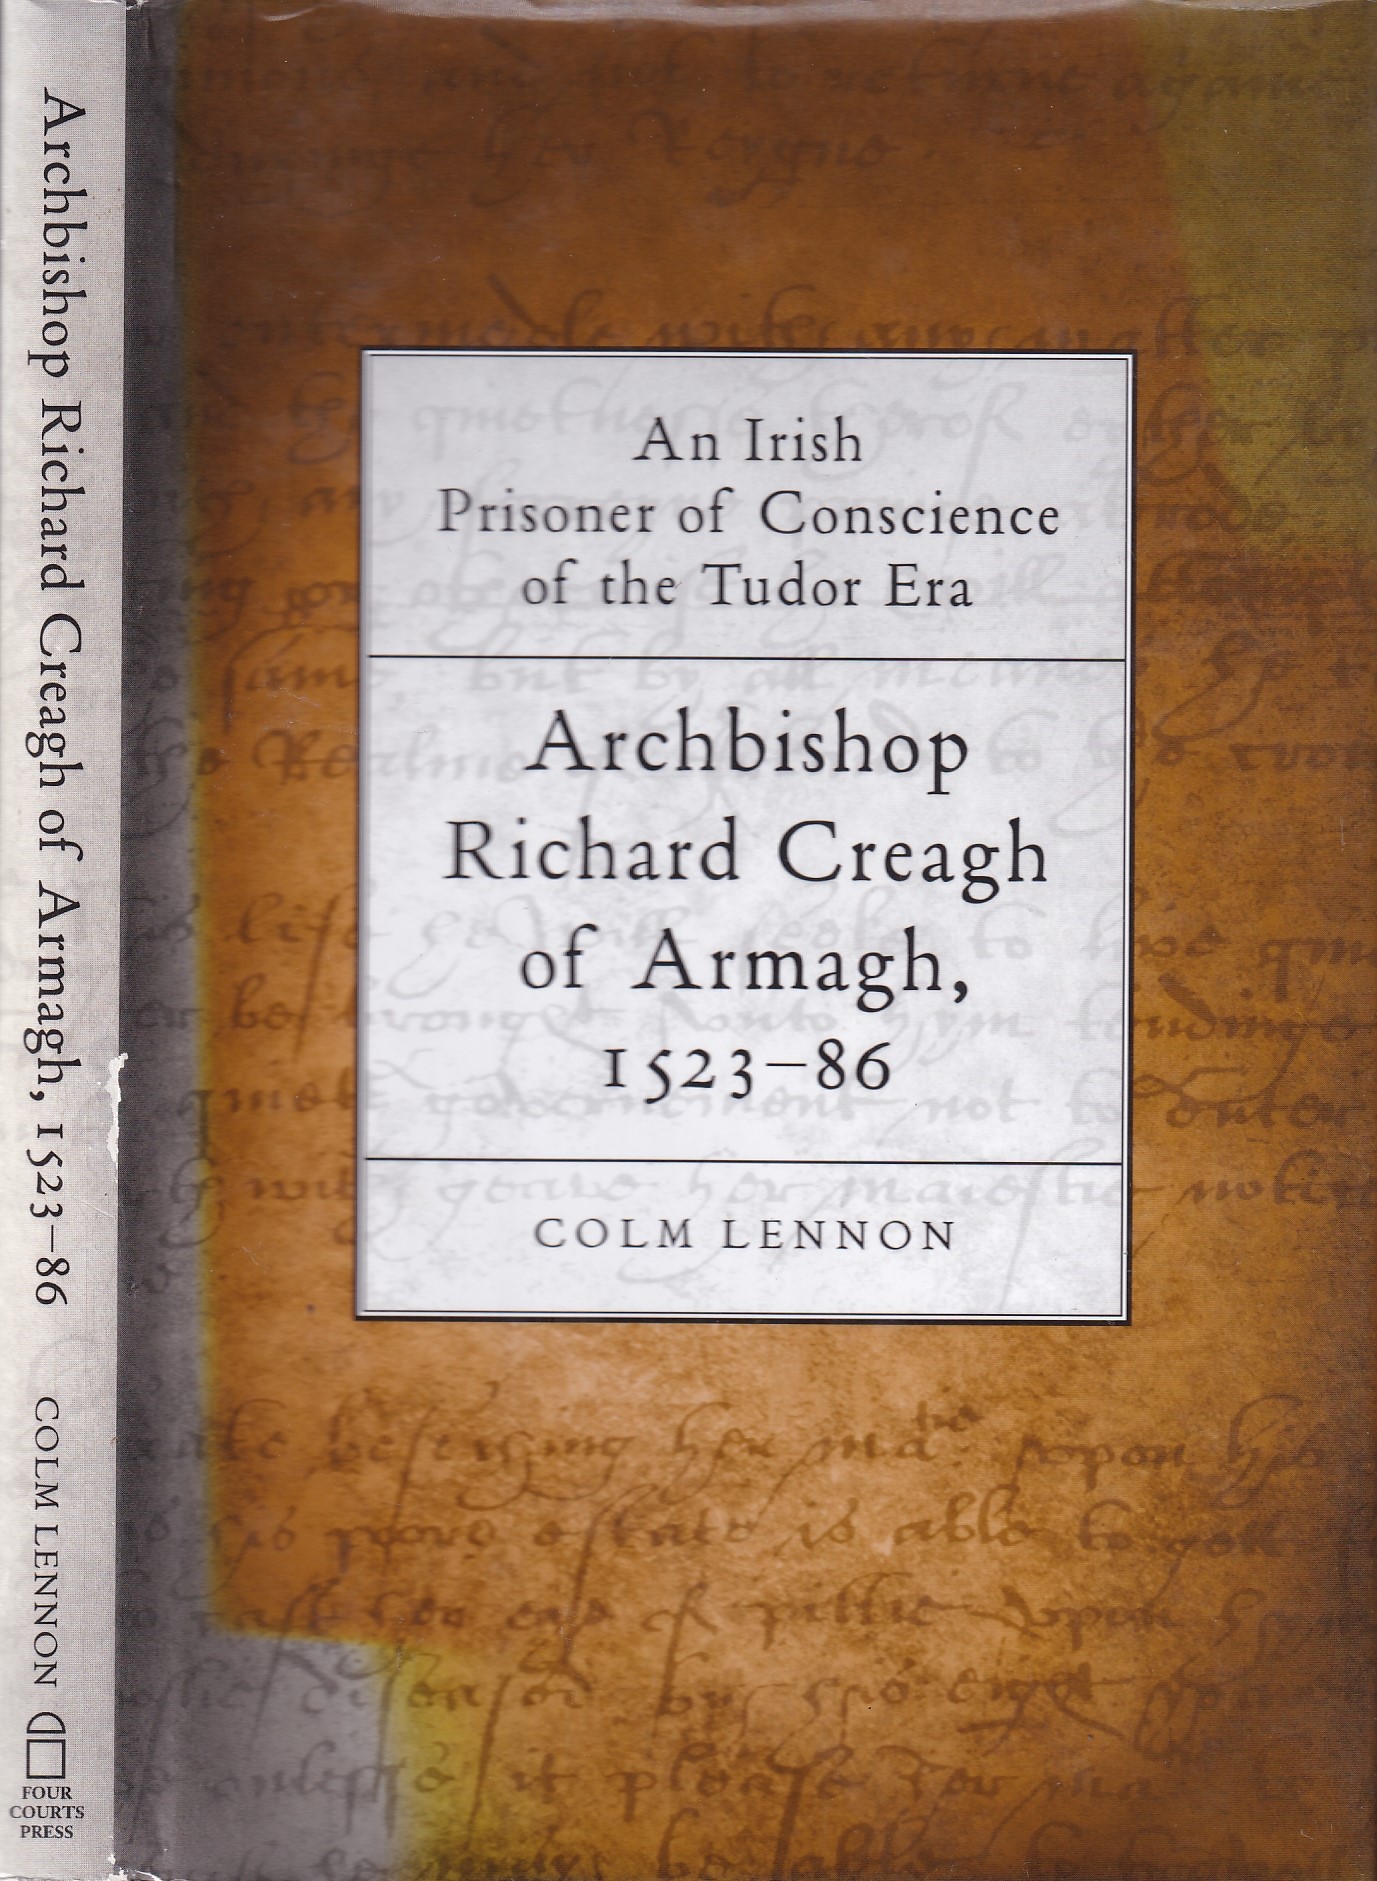 An Irish Prisoner of Conscience in the Tudor Era: Archbishop Richard Creagh by Colm Lennon